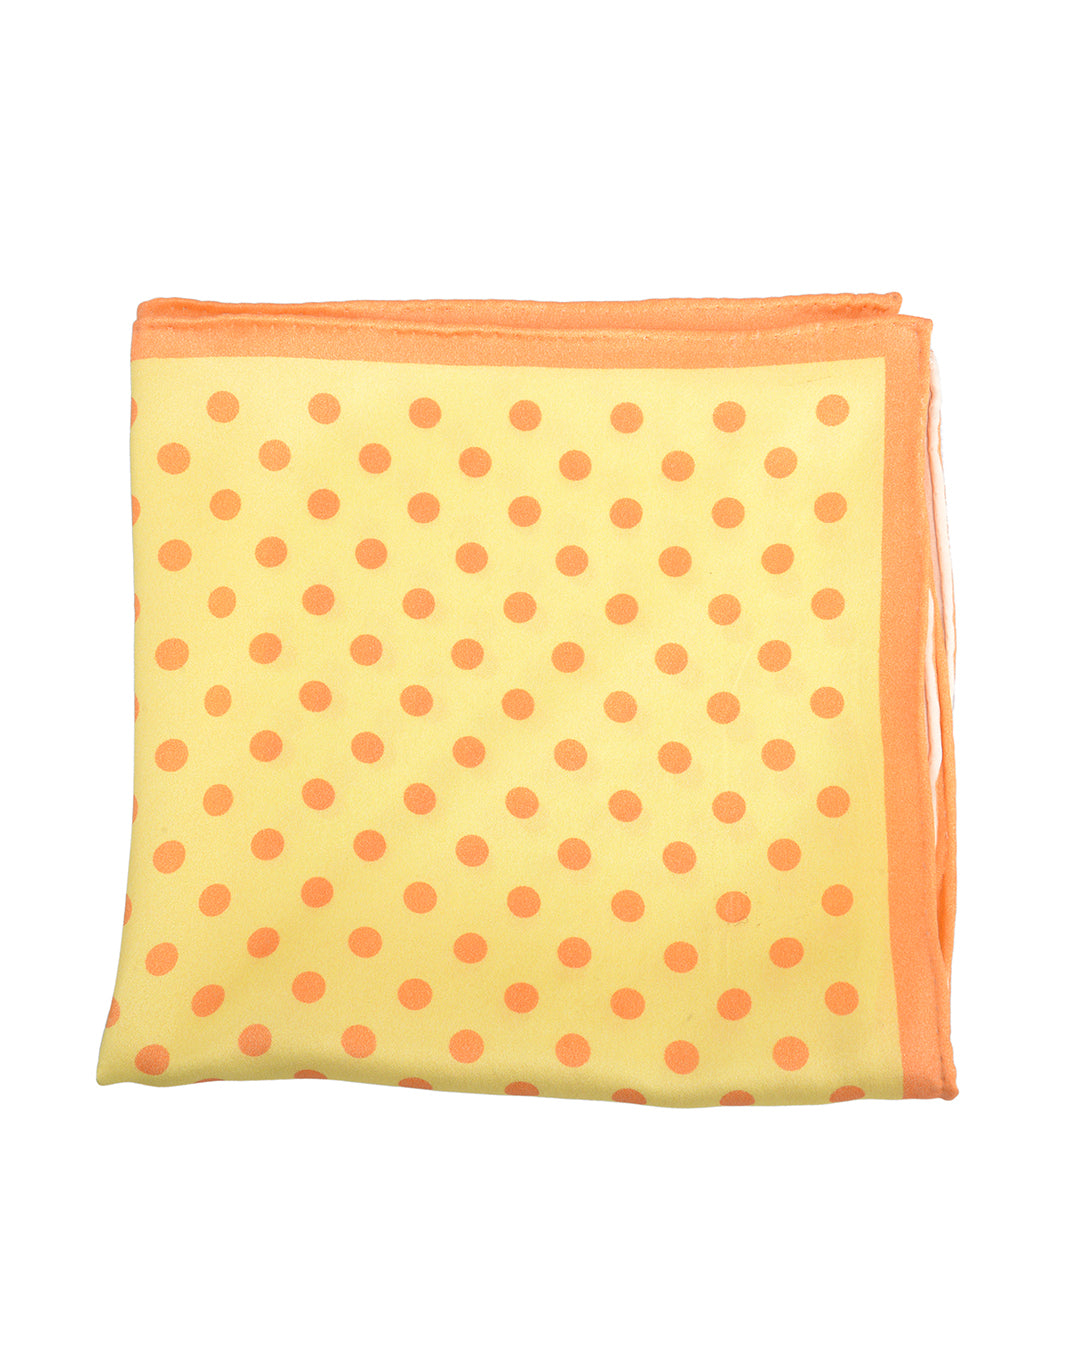 Pocket Square - Big Orange Polka Dots on Yellow